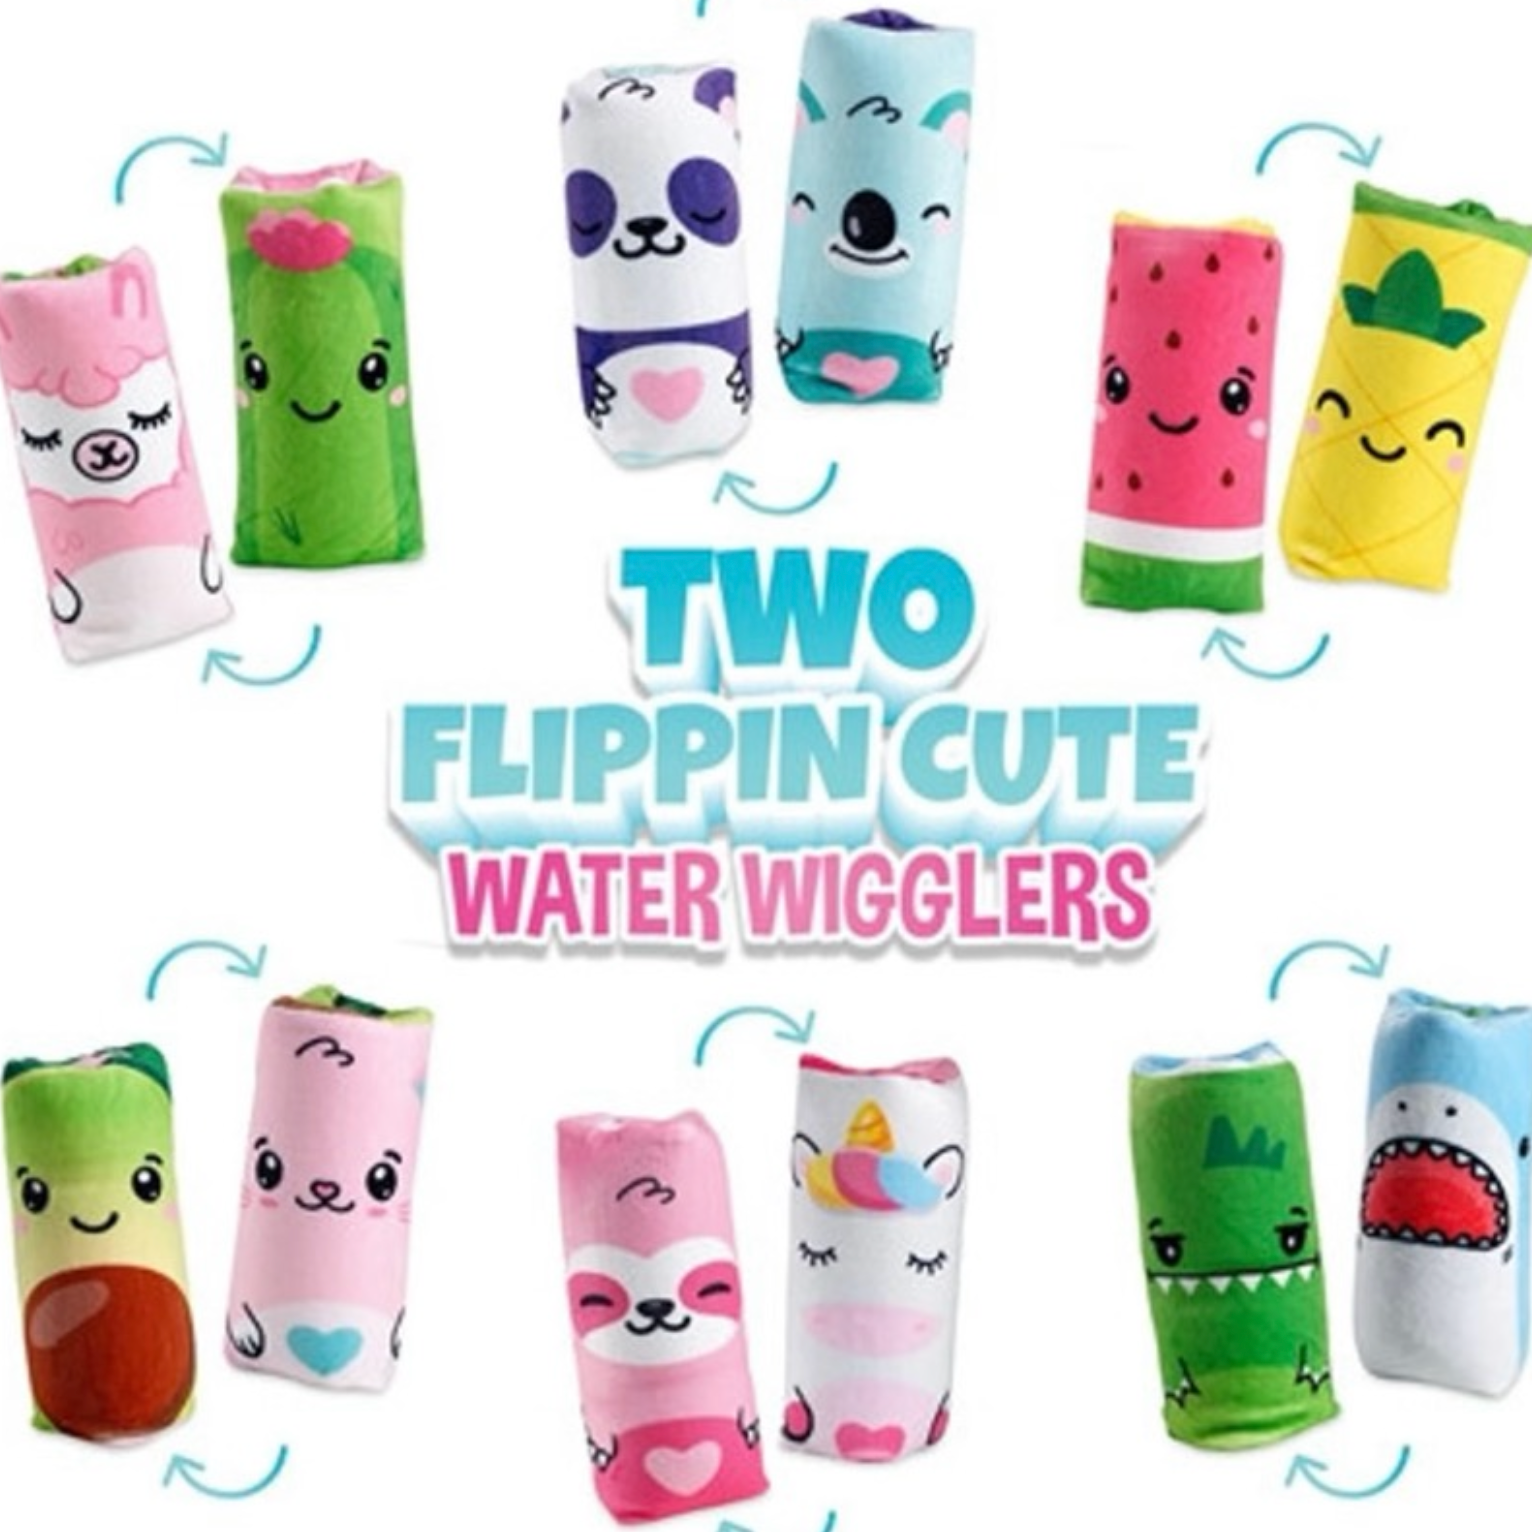 Water Wigglers